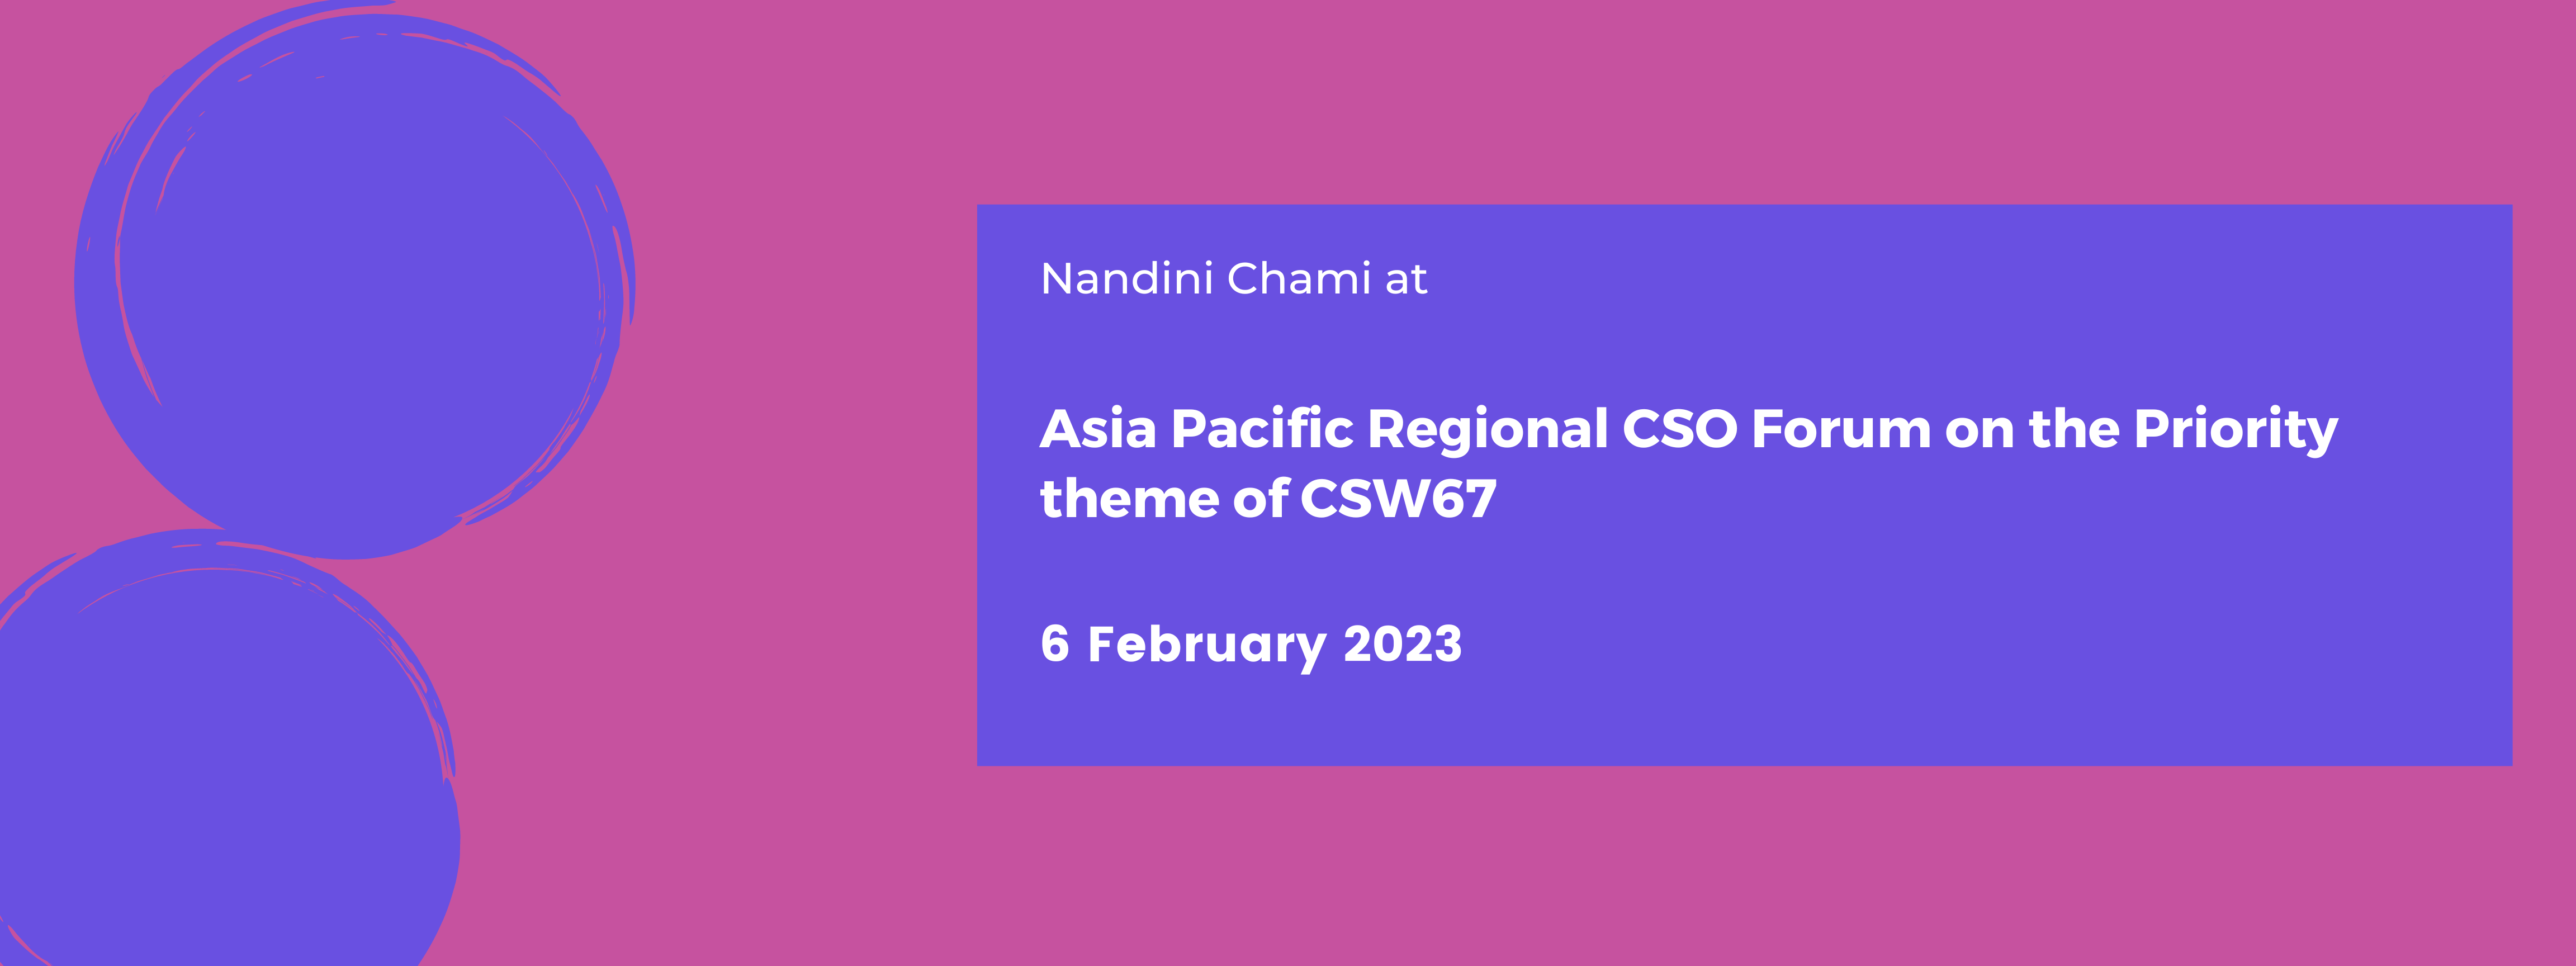 Asia Pacific Regional CSO Forum on the Priority theme of CSW67